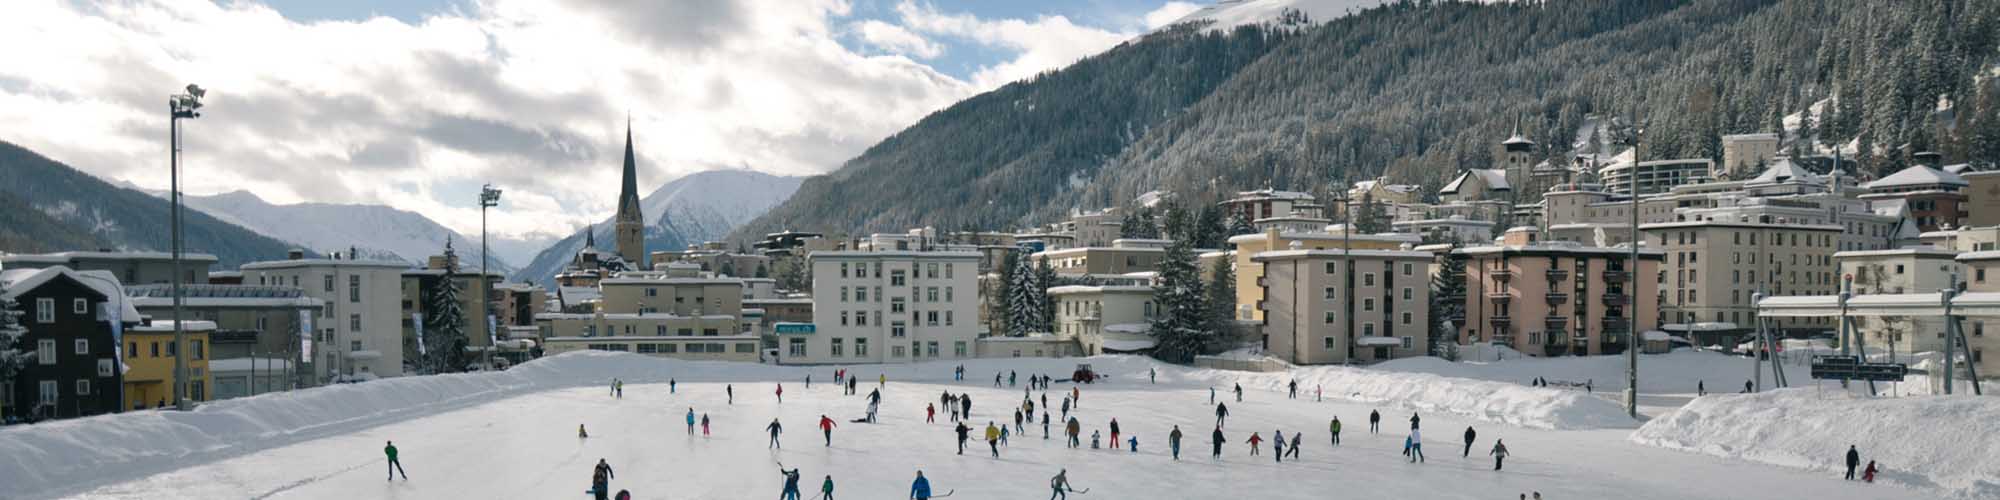 Hotel Davos - 18'000 Quadratmeter - grösste Natureisbahn Europas